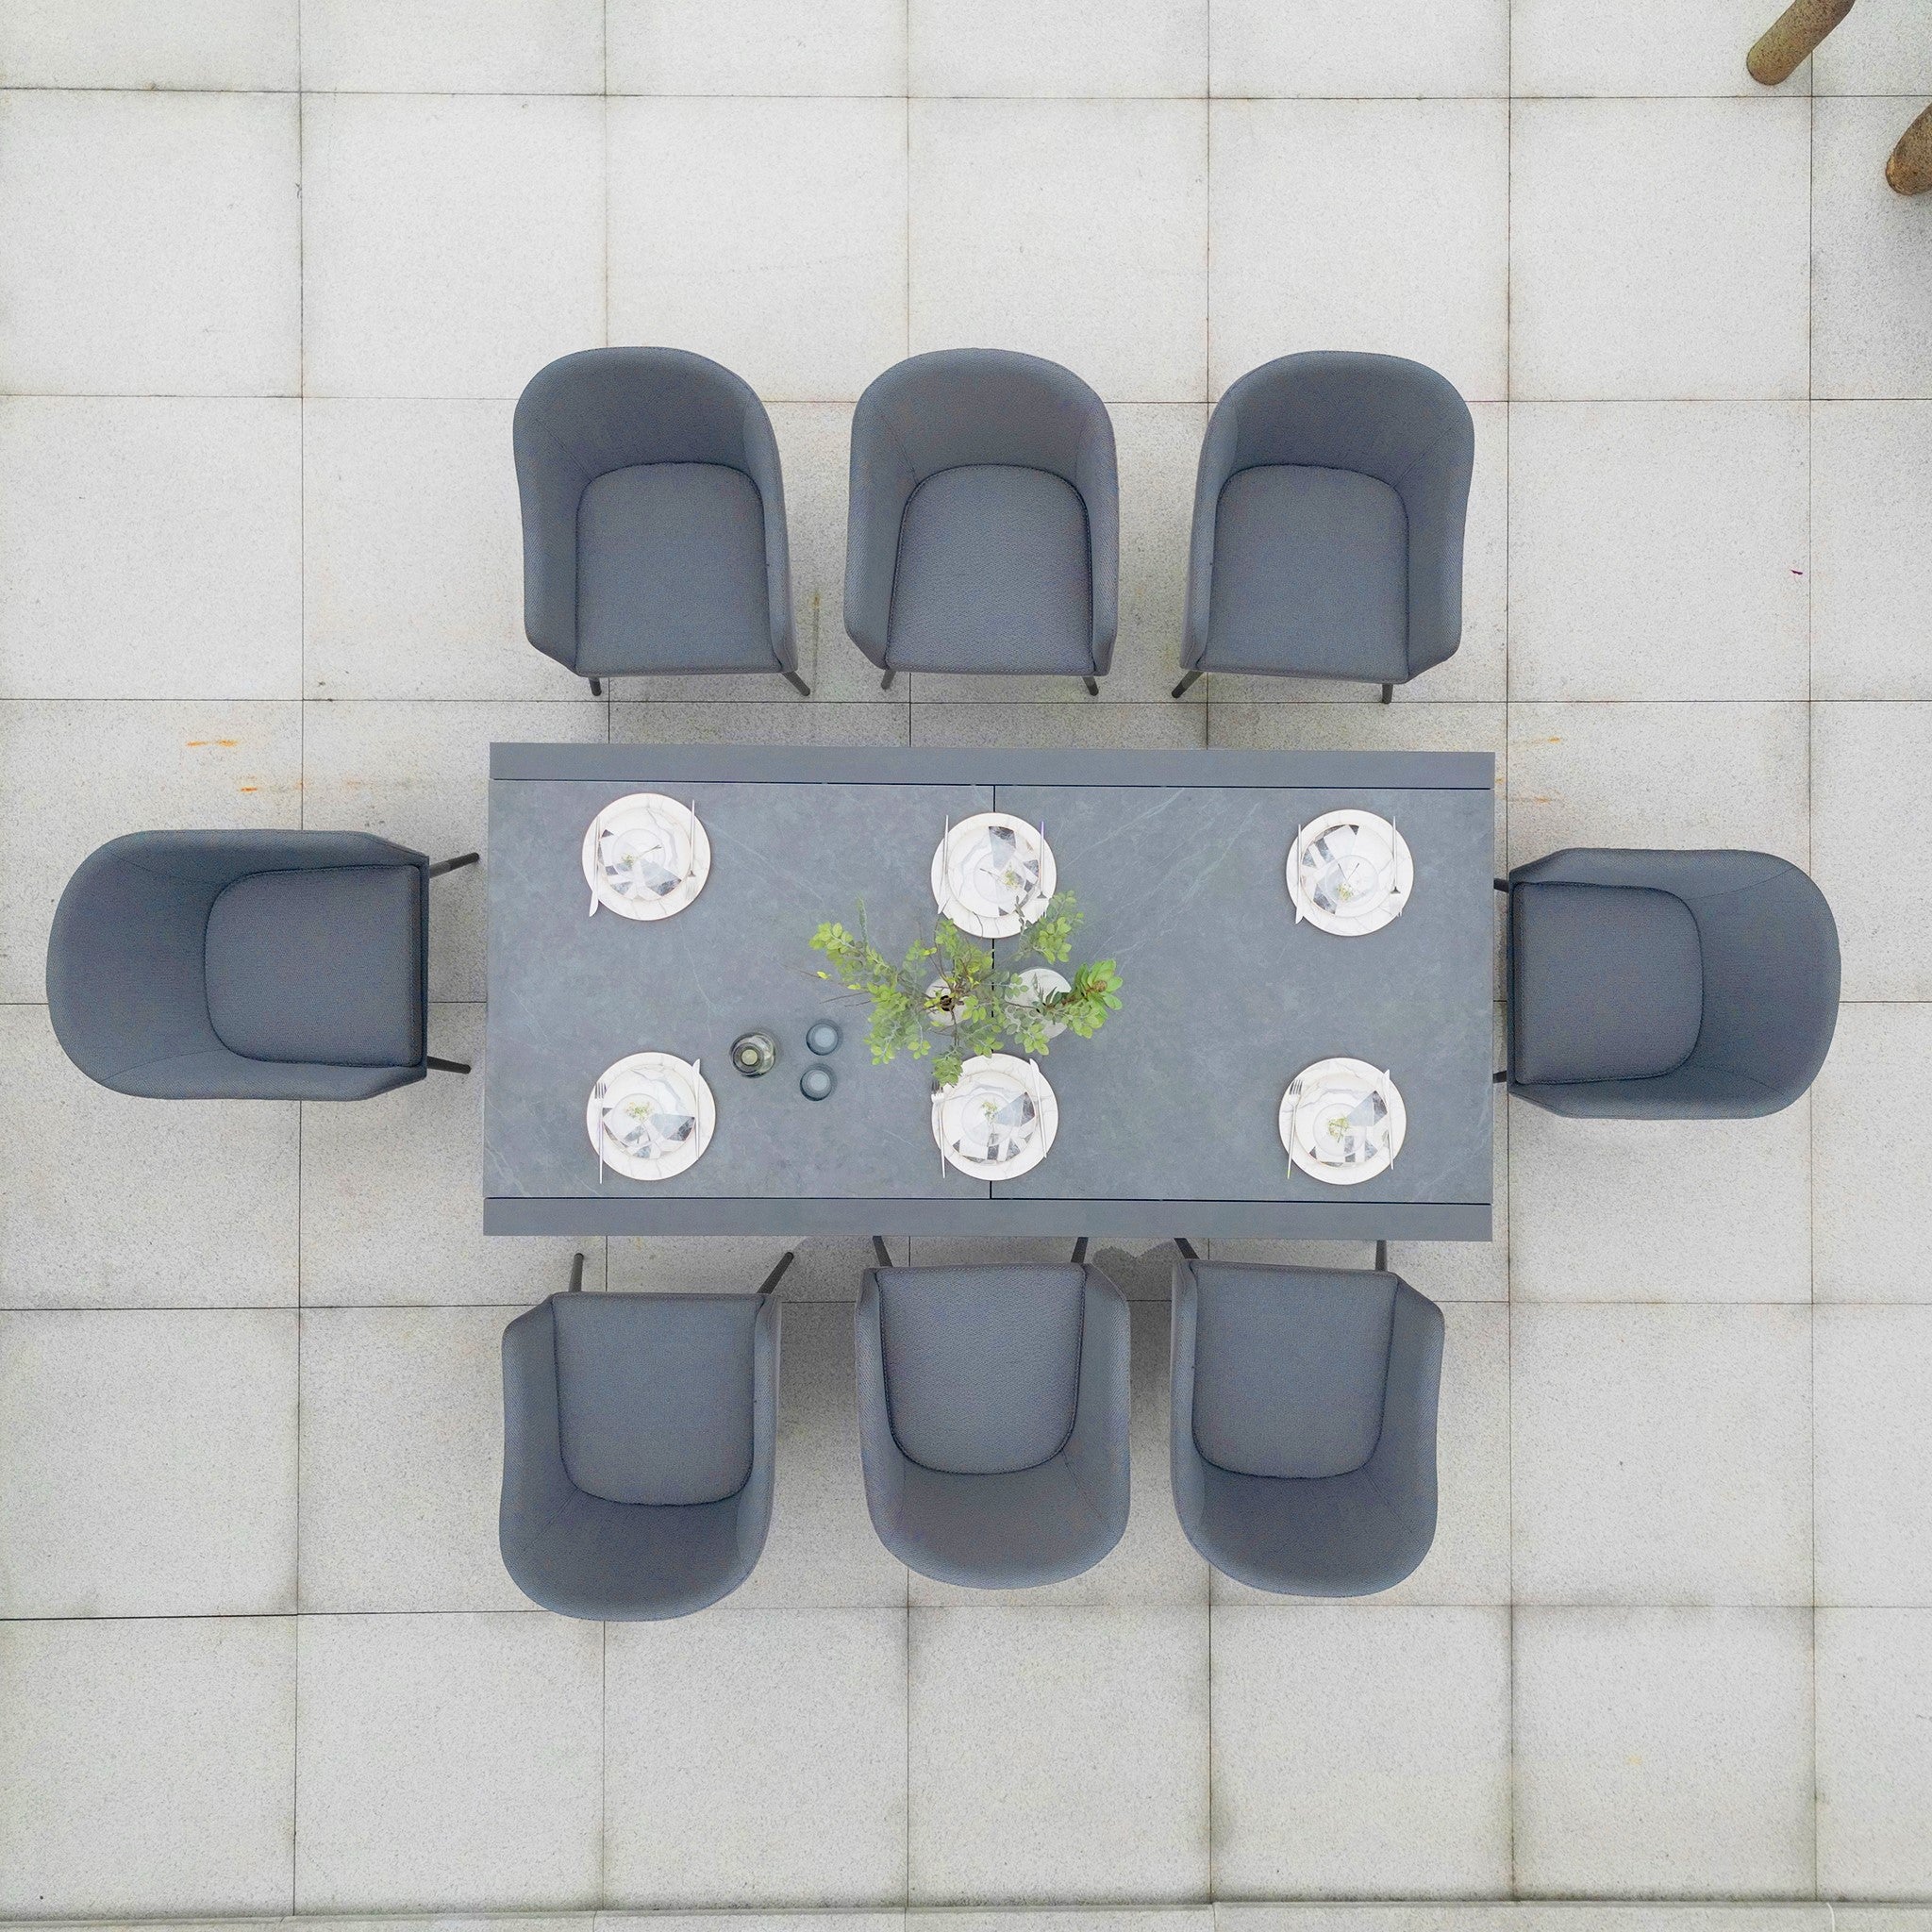 Luna 8 Seat Outdoor Fabric Extending Ceramic Dining Set in Grey